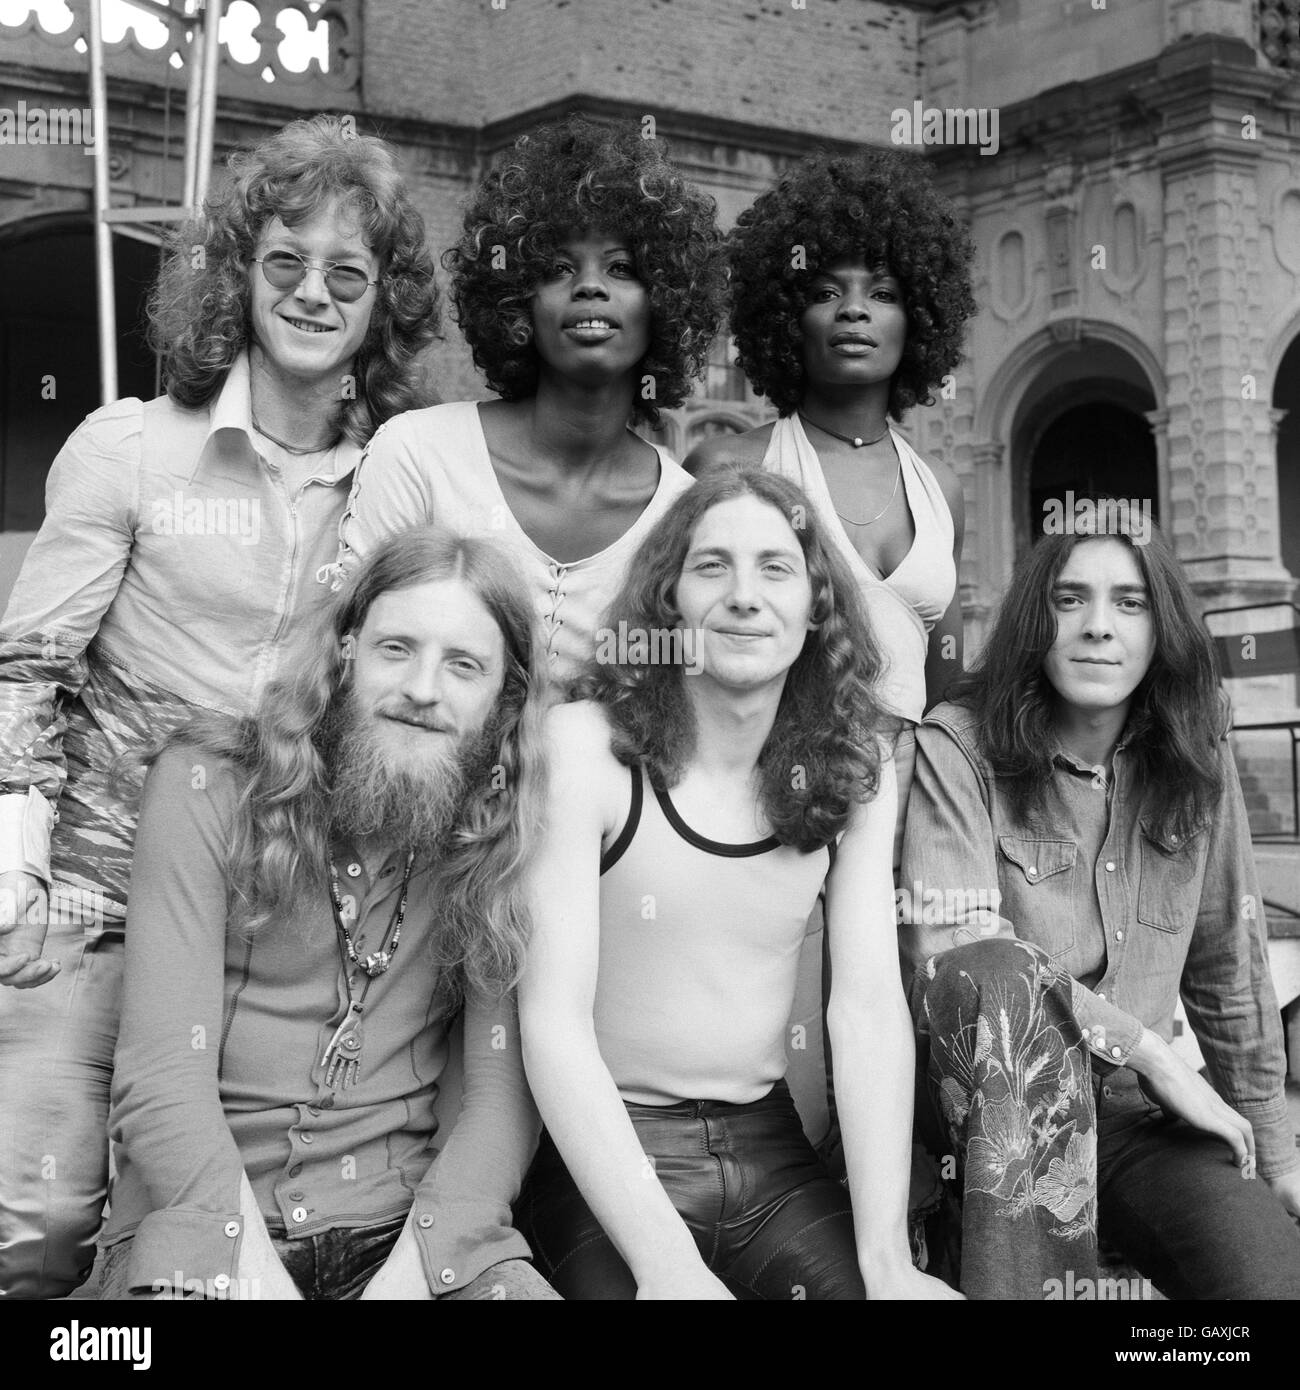 British Pop Music - The 1970s - Sunshine - London - 1972 Stock Photo - Alamy